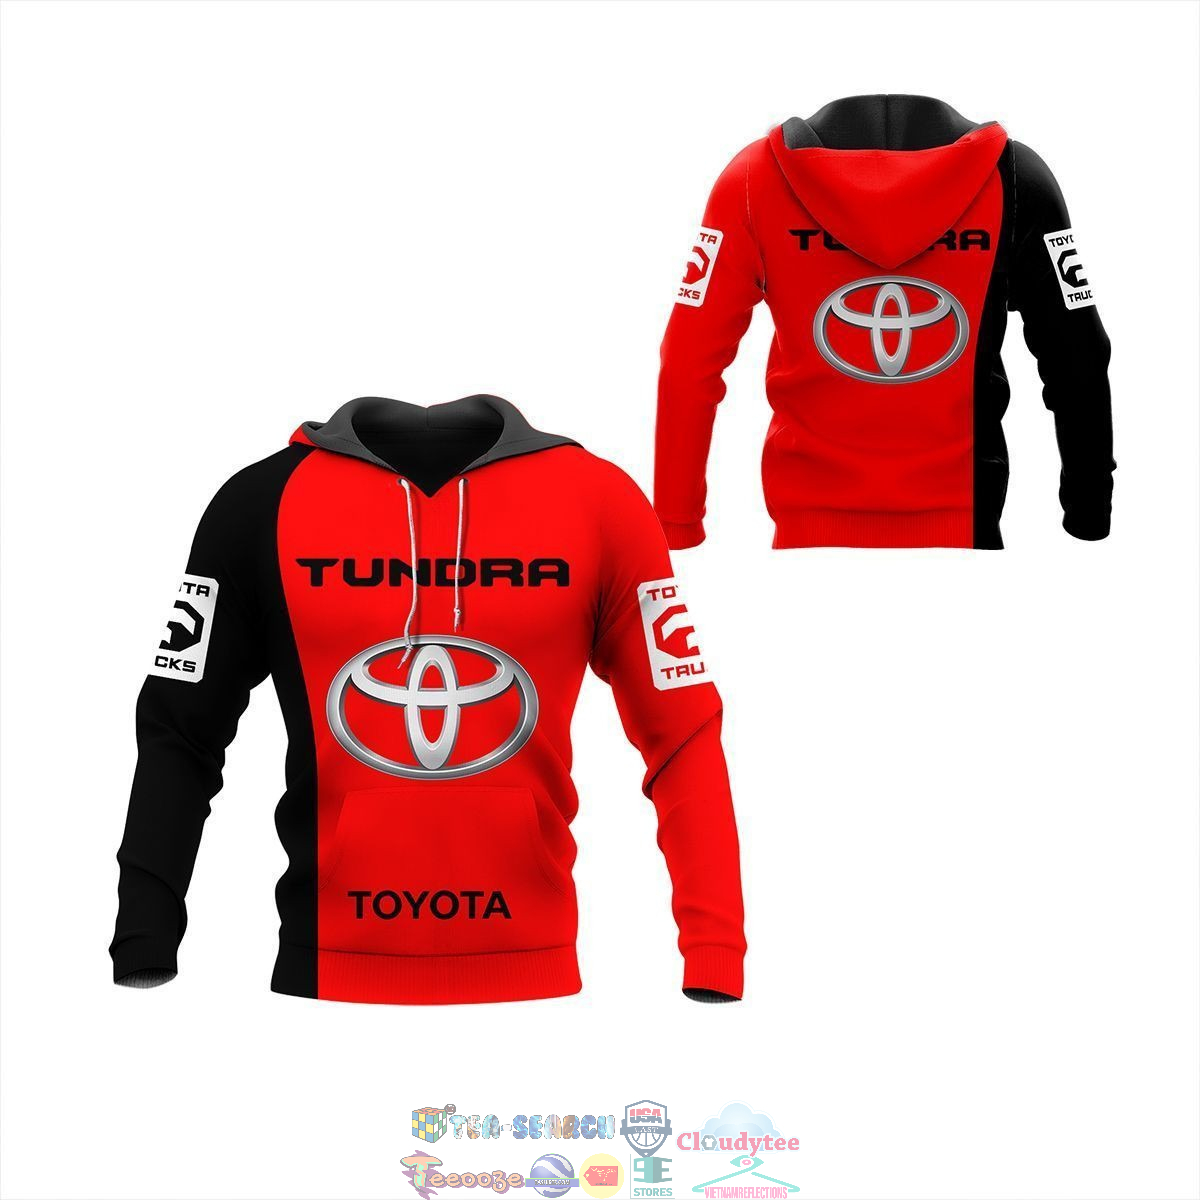 Toyota Tundra ver 11 3D hoodie and t-shirt – Saleoff